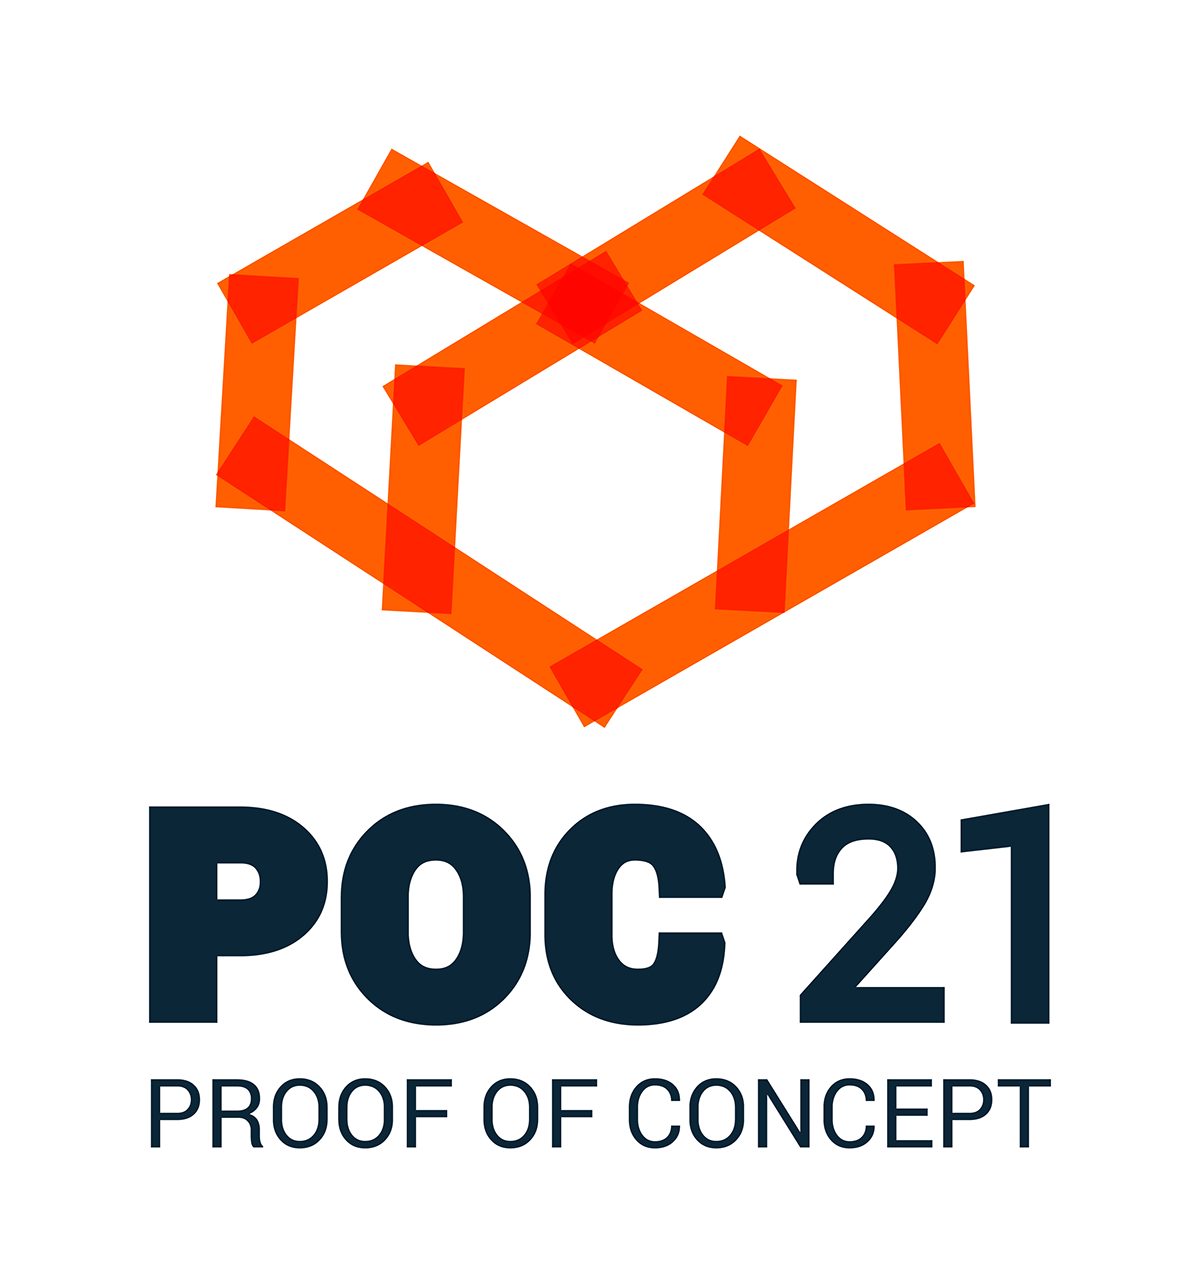 POC21 Proof of concept design DIY open source